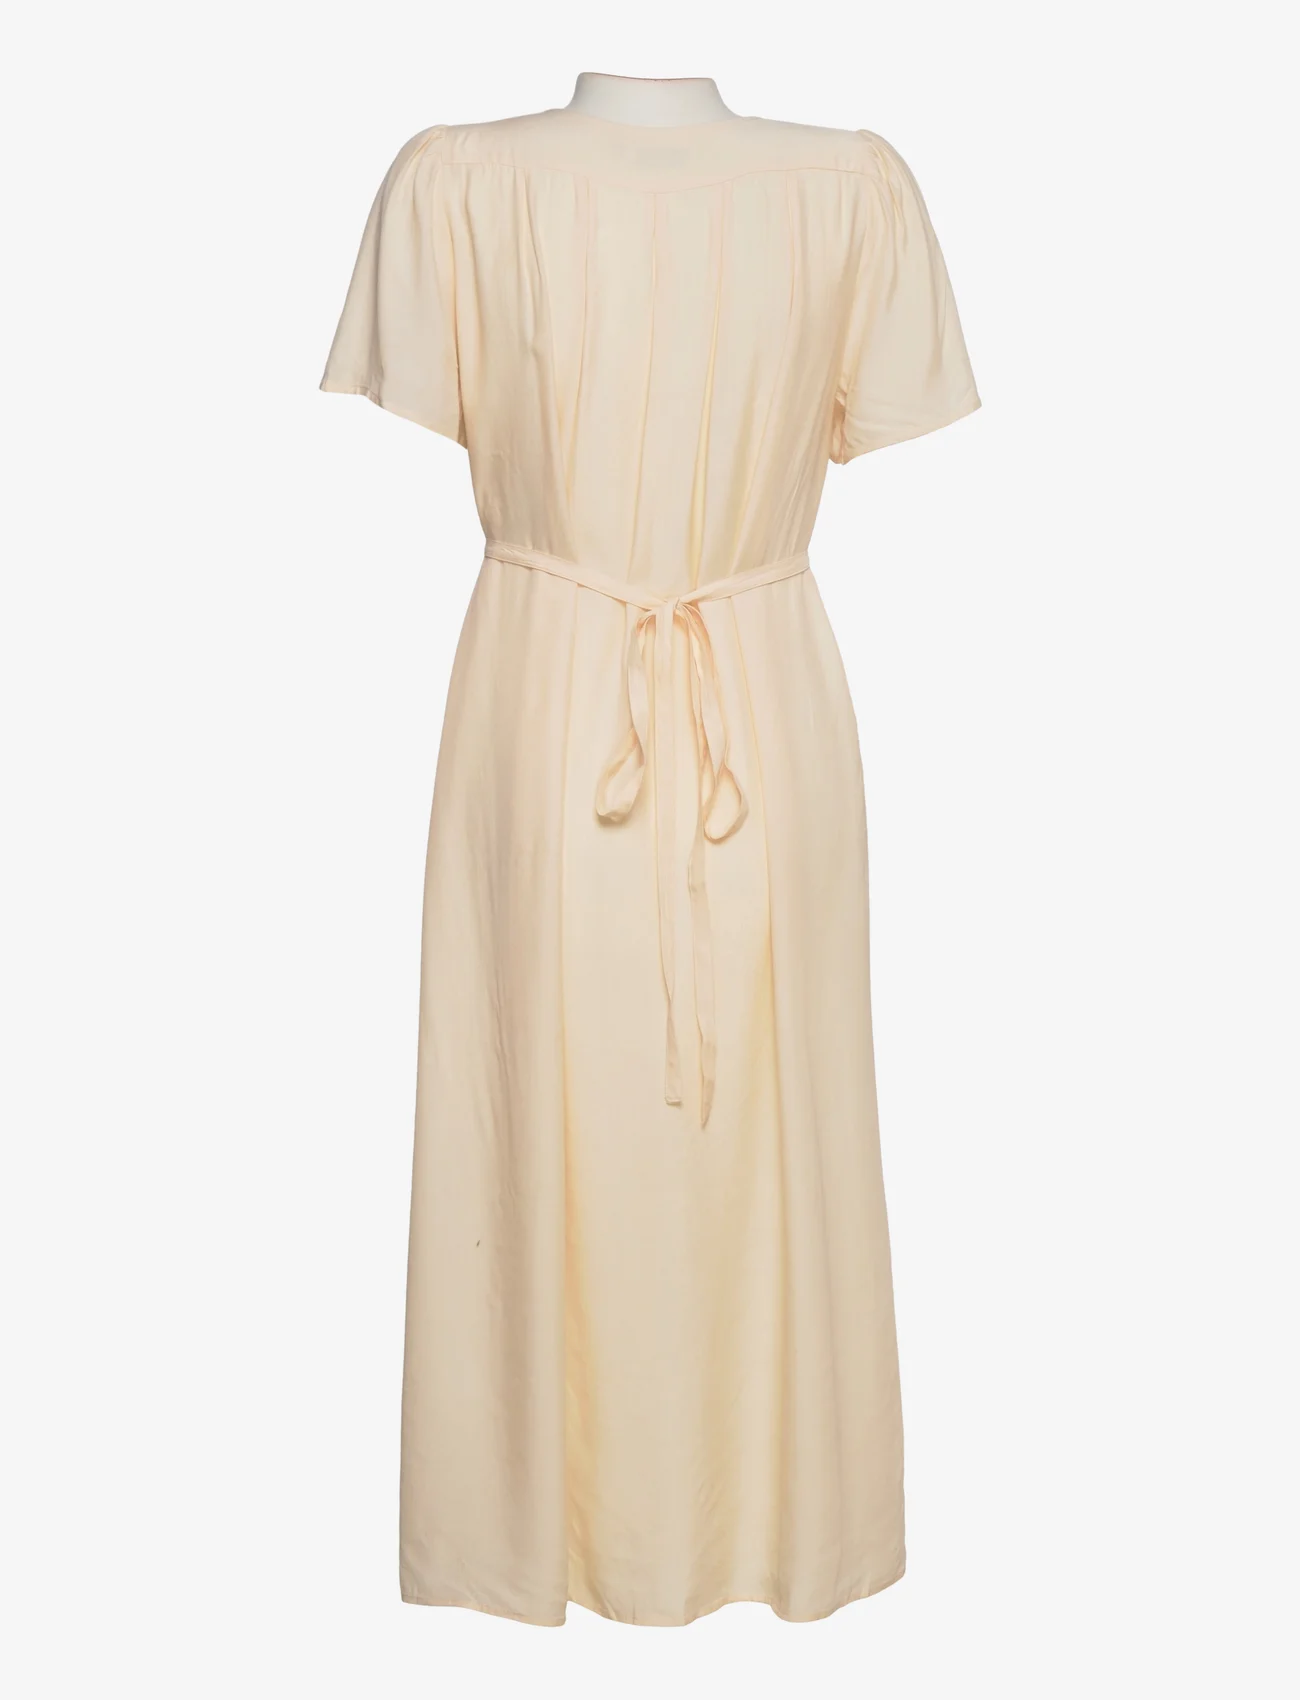 Noa Noa - Dress short sleeve - midikjoler - white swan - 1